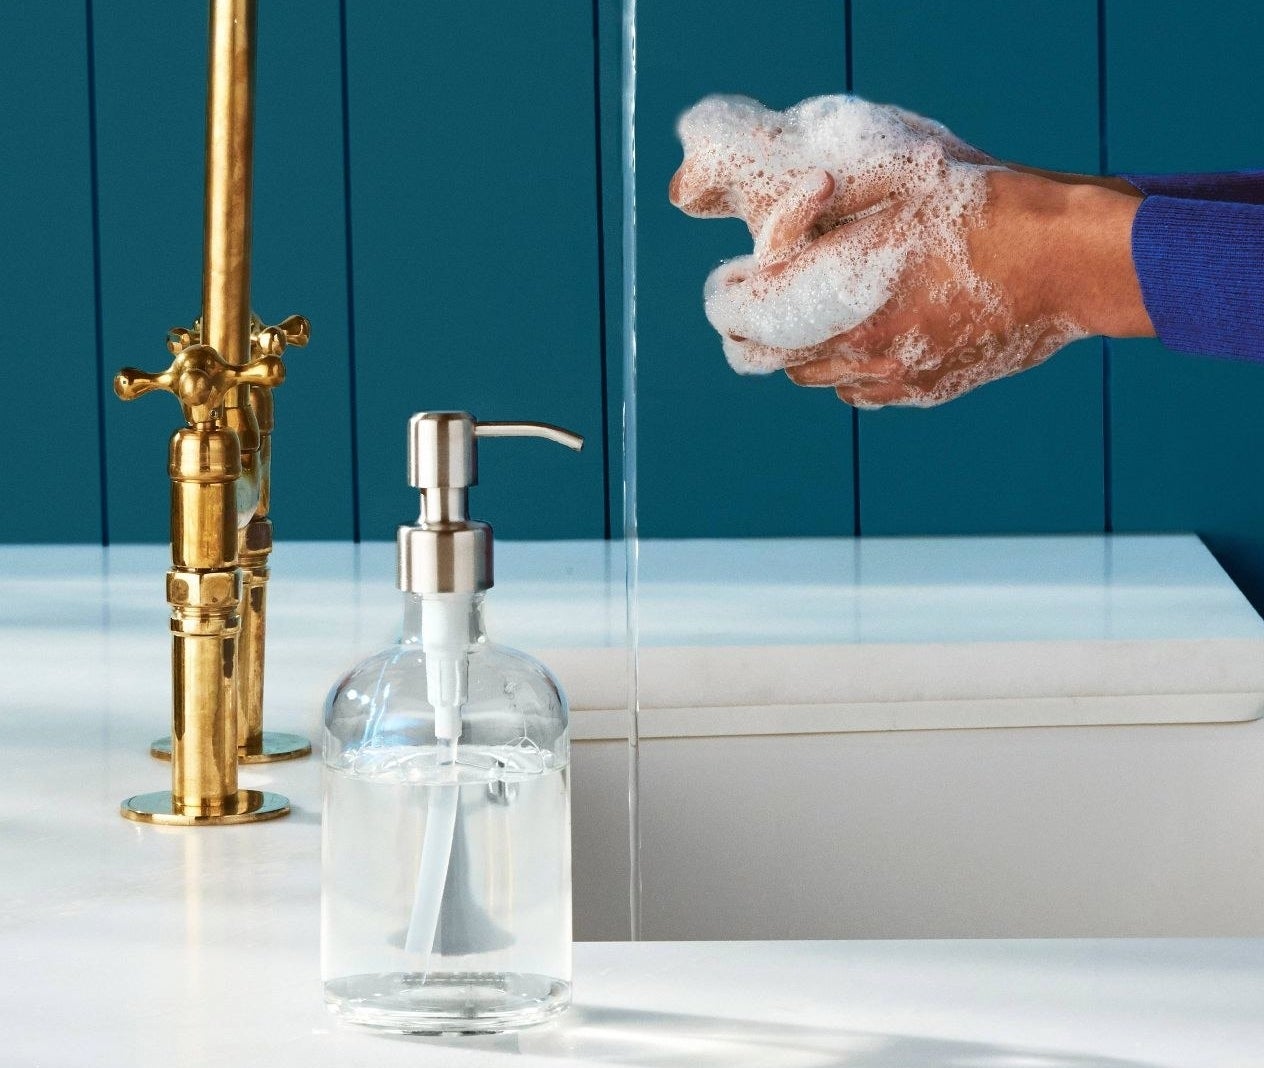 glass soap dispenser next to a sink